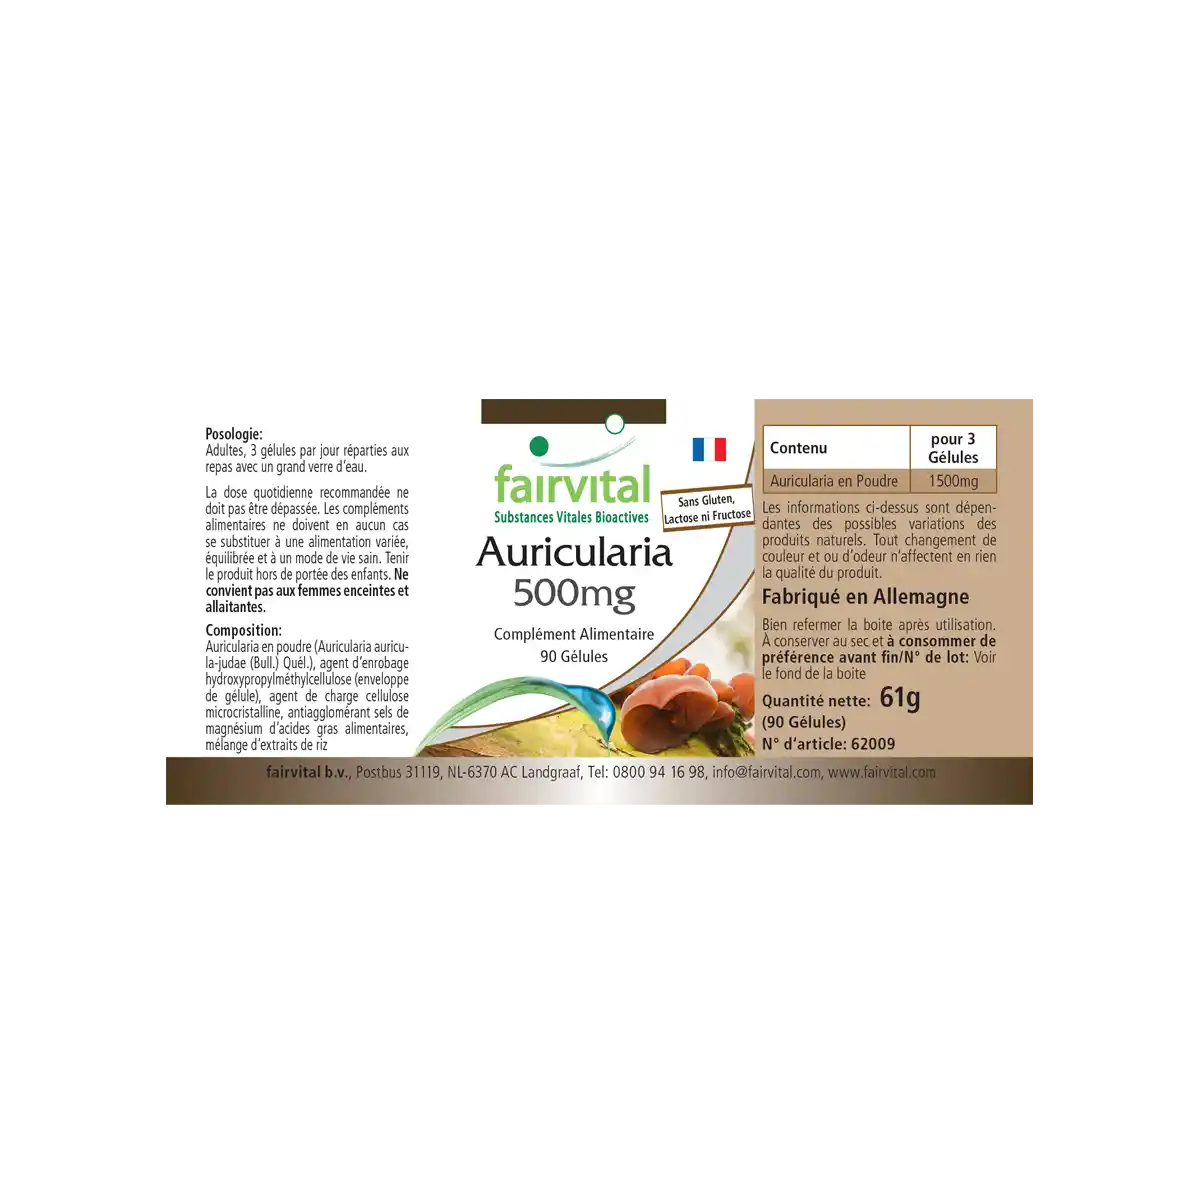 Auricularia 500mg - 90 capsules